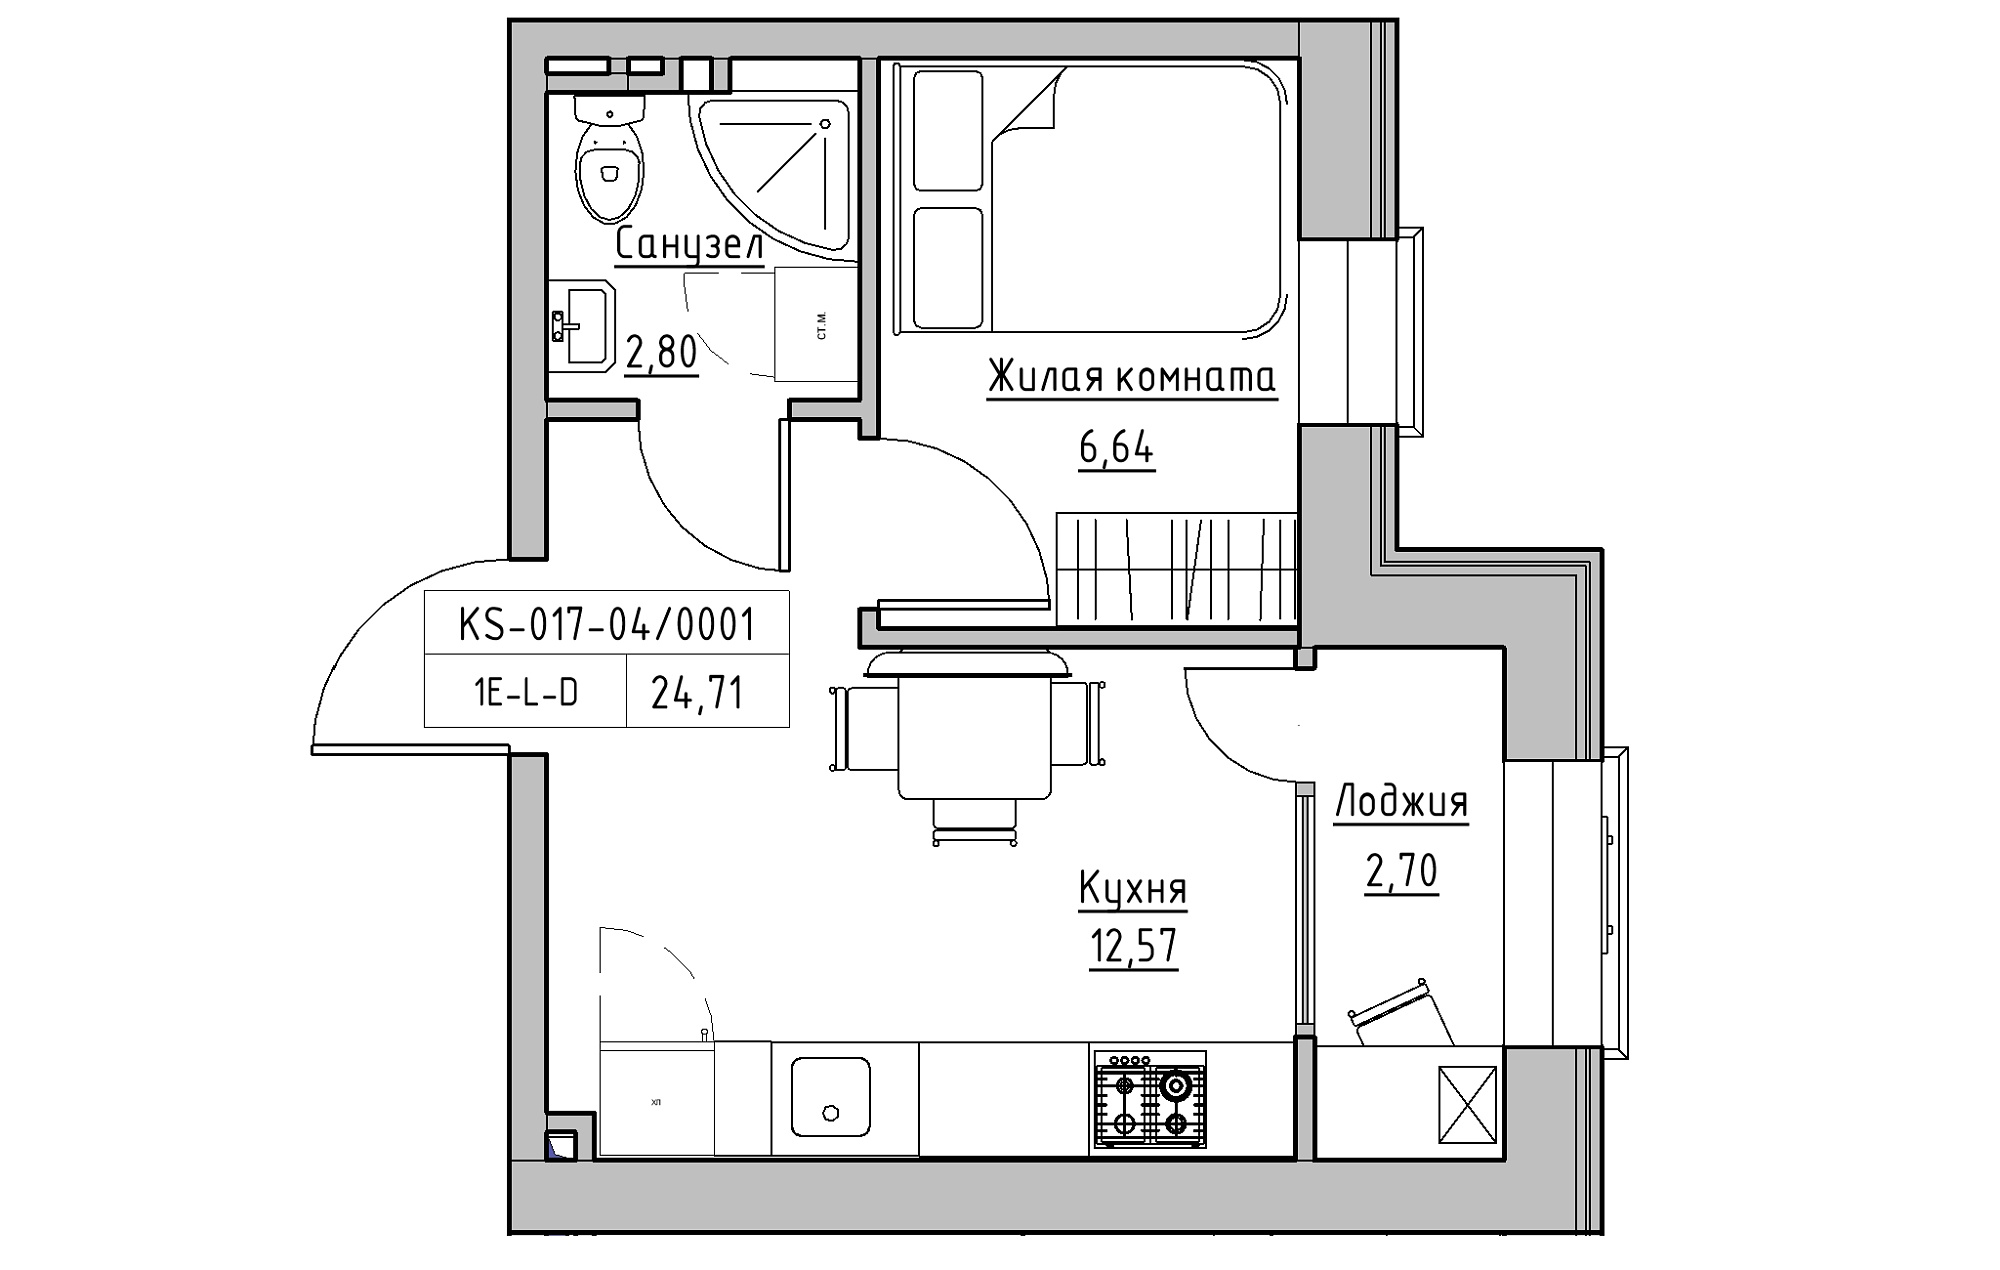 Planning 1-rm flats area 24.71m2, KS-017-04/0001.